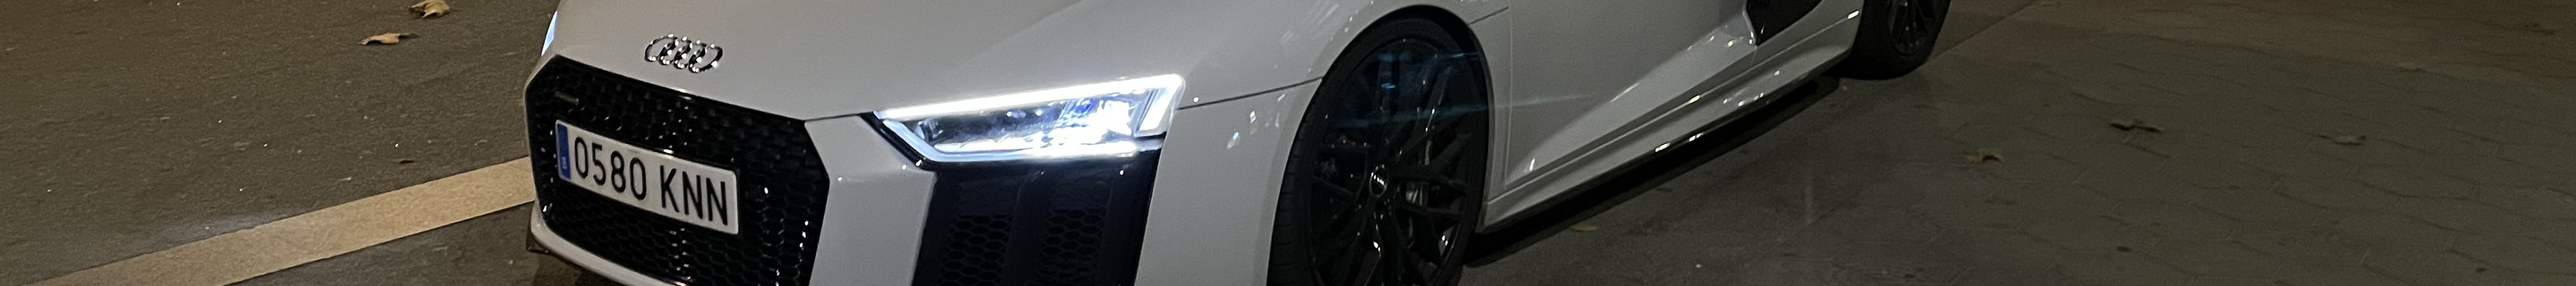 Audi R8 V10 Plus Spyder 2017